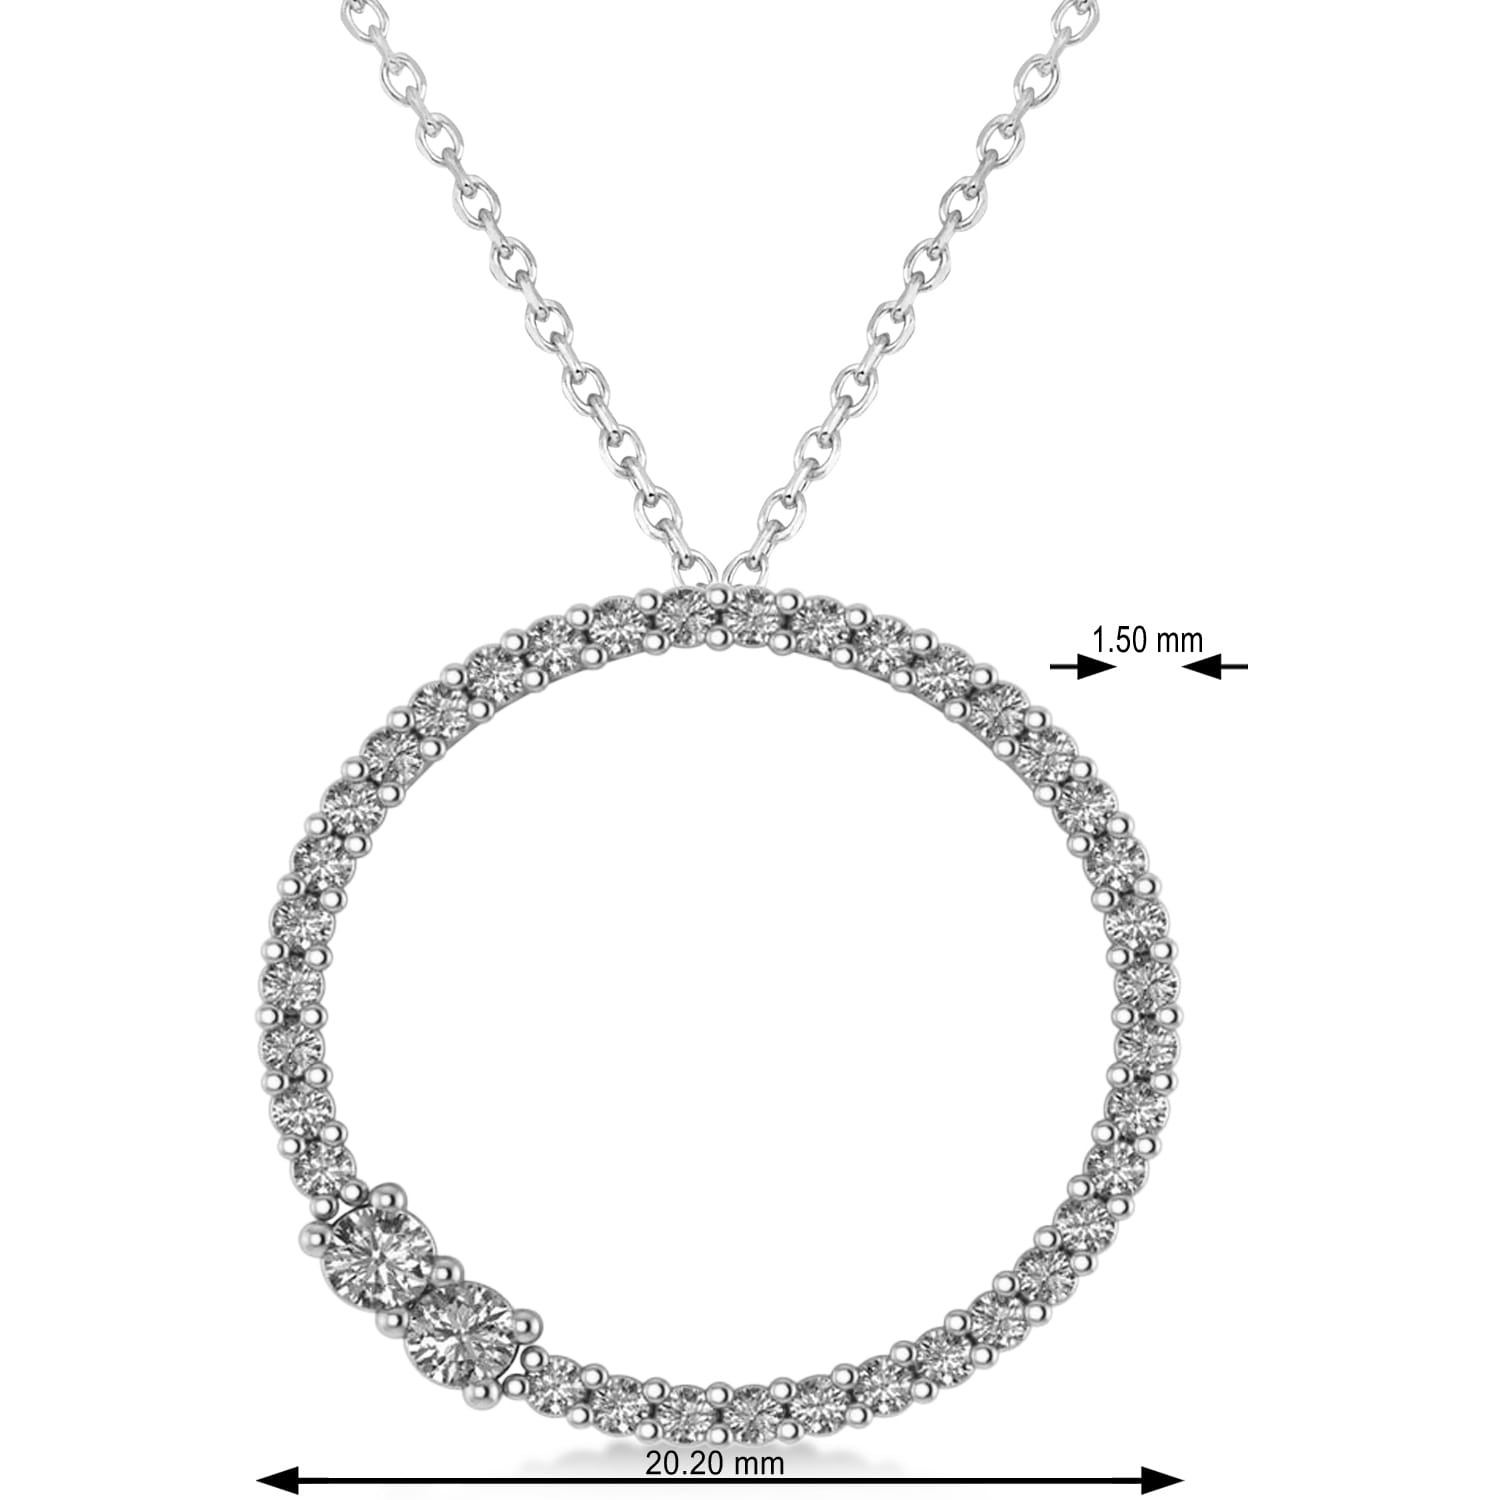 Moissanite Locked Circle of Life Pendant Necklace 14k White Gold (0.46ct)